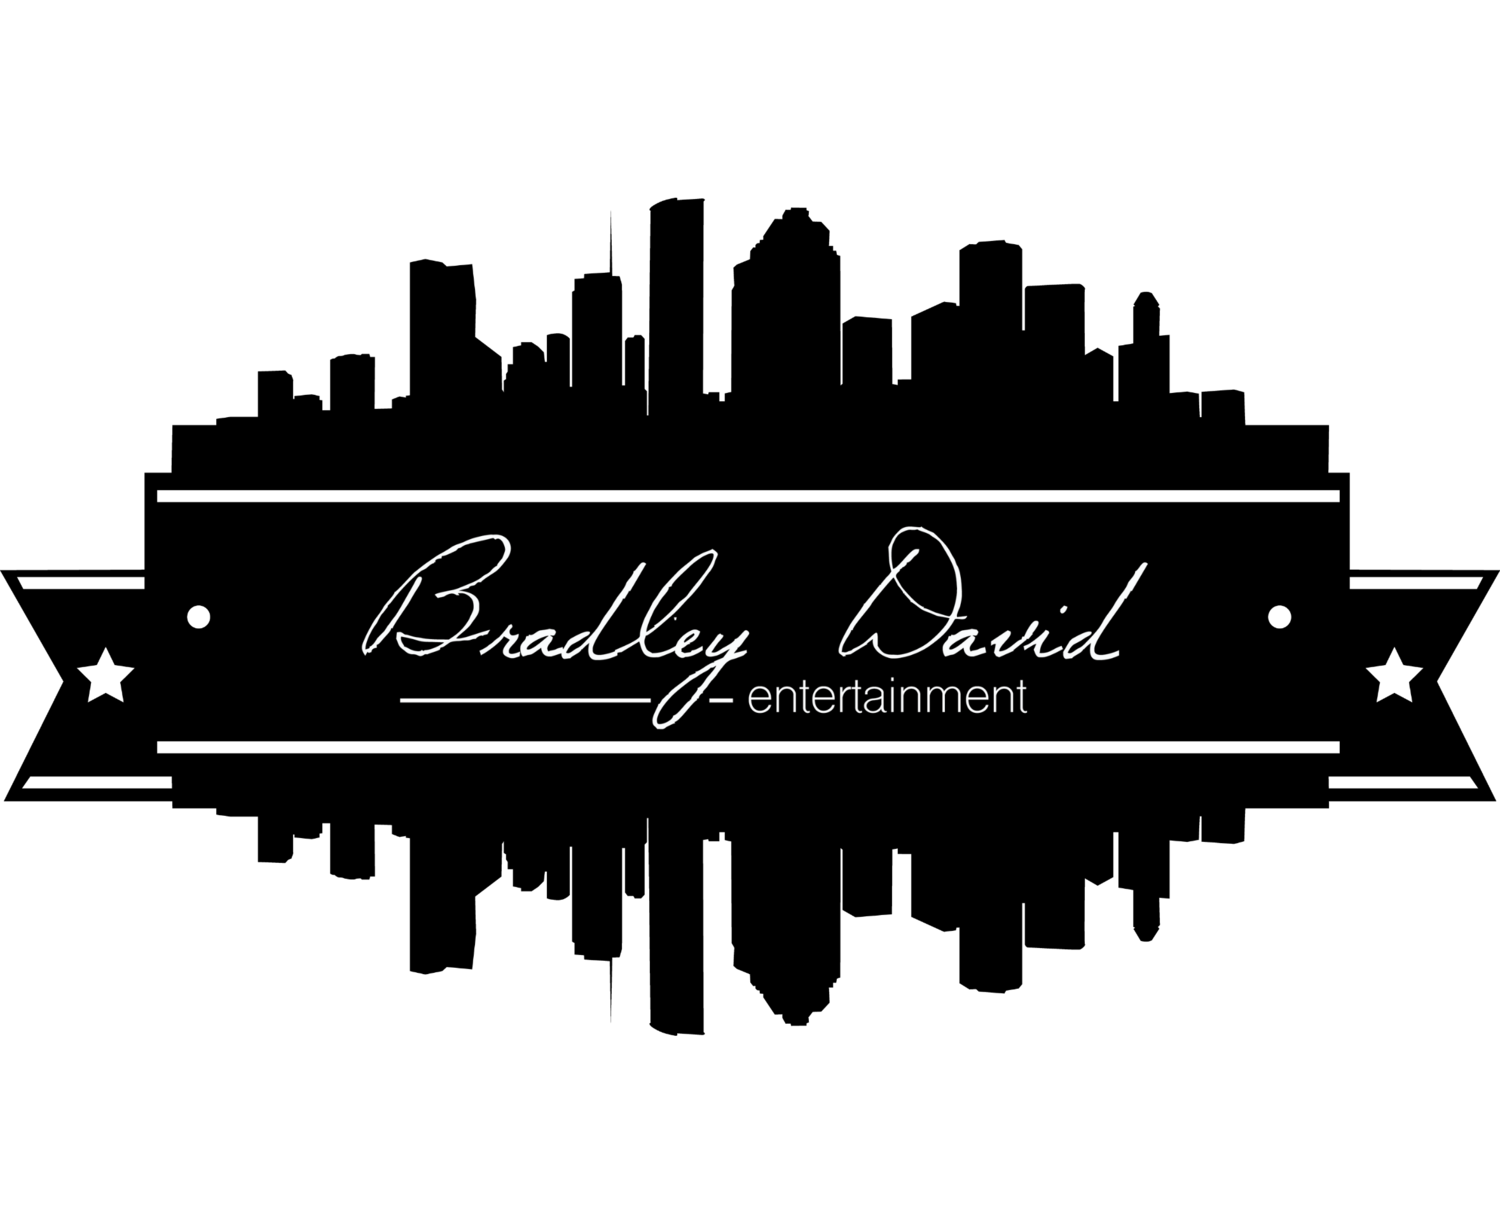 Bradley David Entertainment